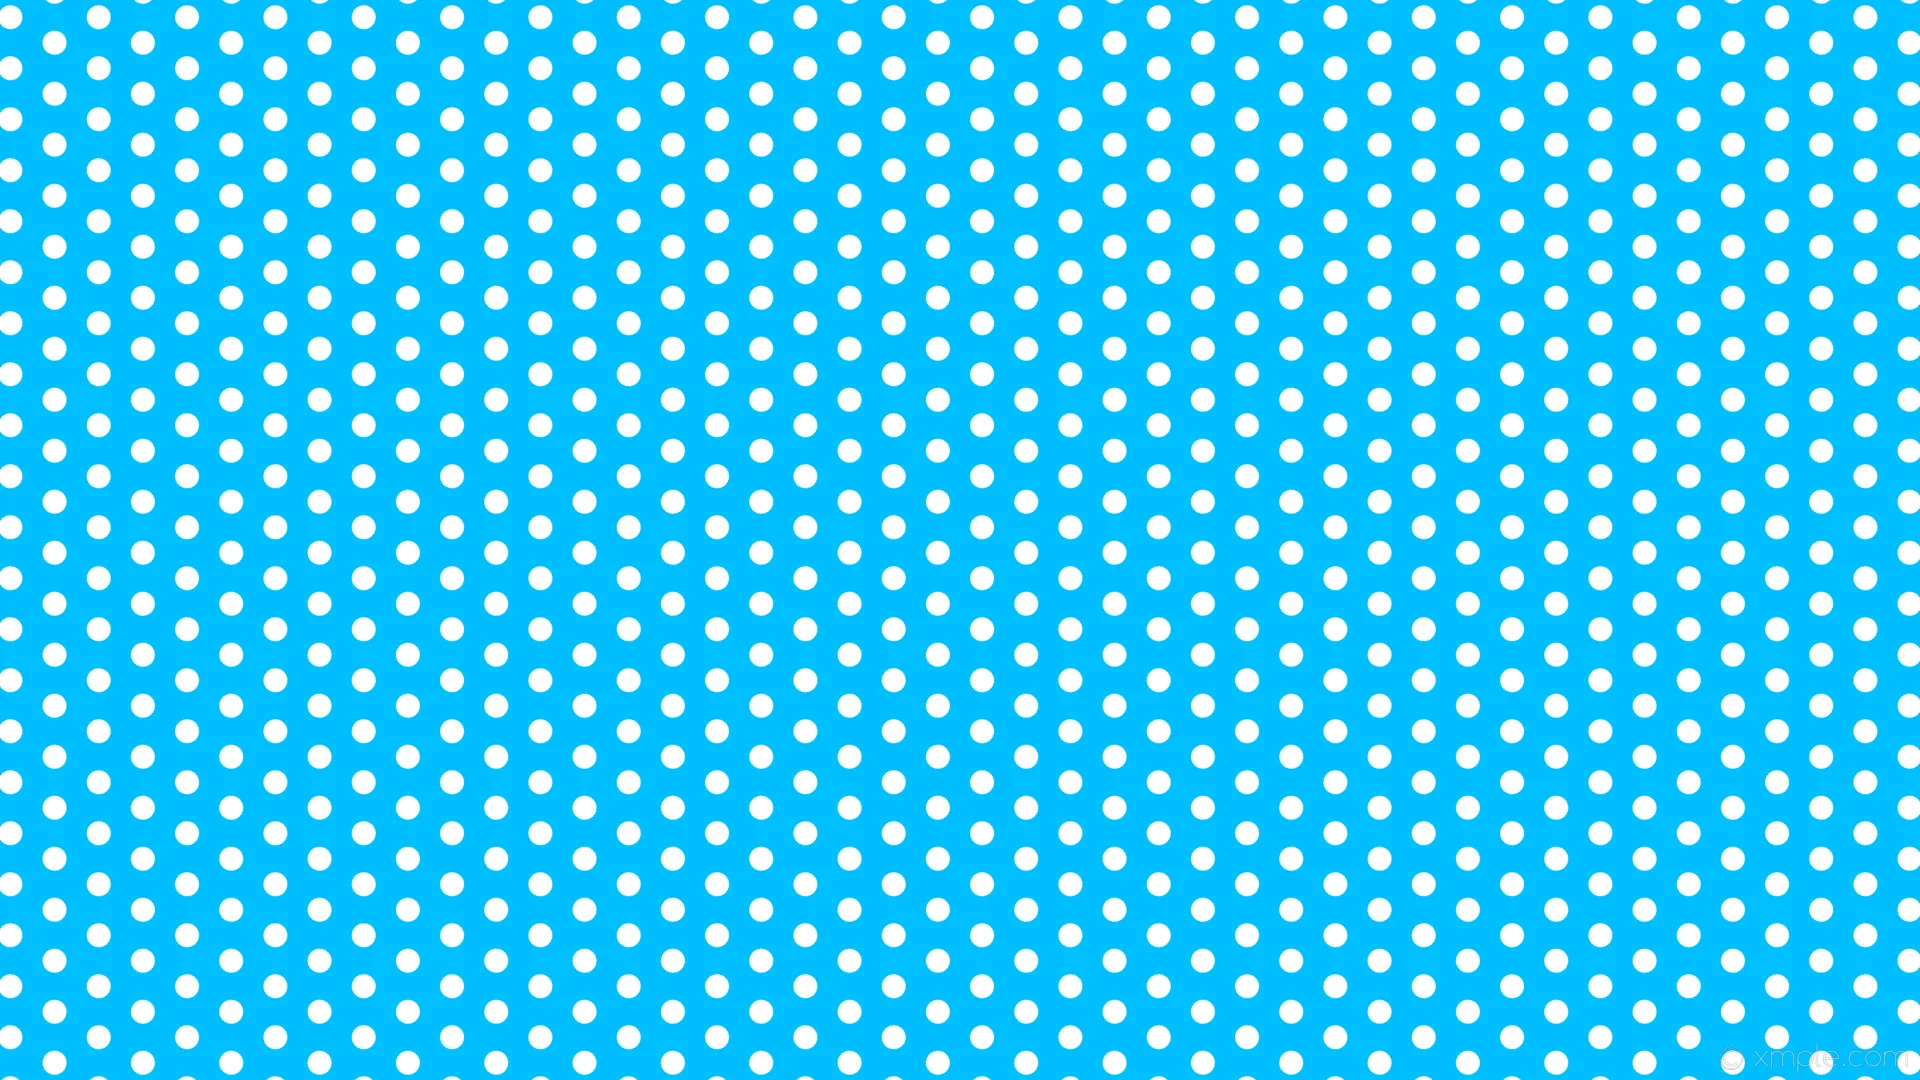 Wallpaper hexagon blue white polka dots deep sky blue bfff #ffffff diagonal 30